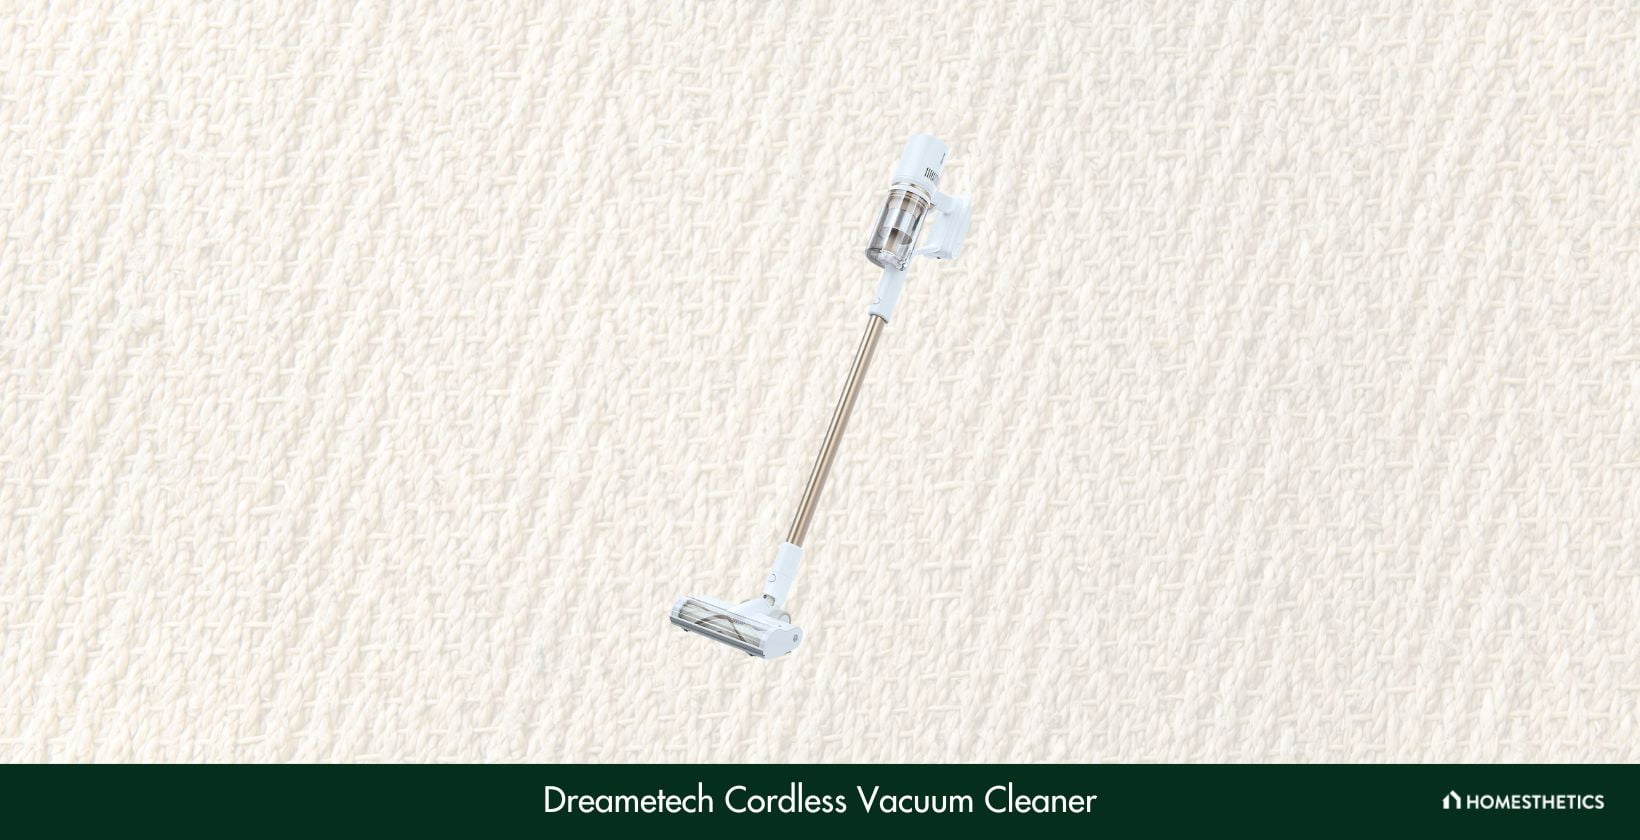 Dreametech Cordless Vacuum Cleaner